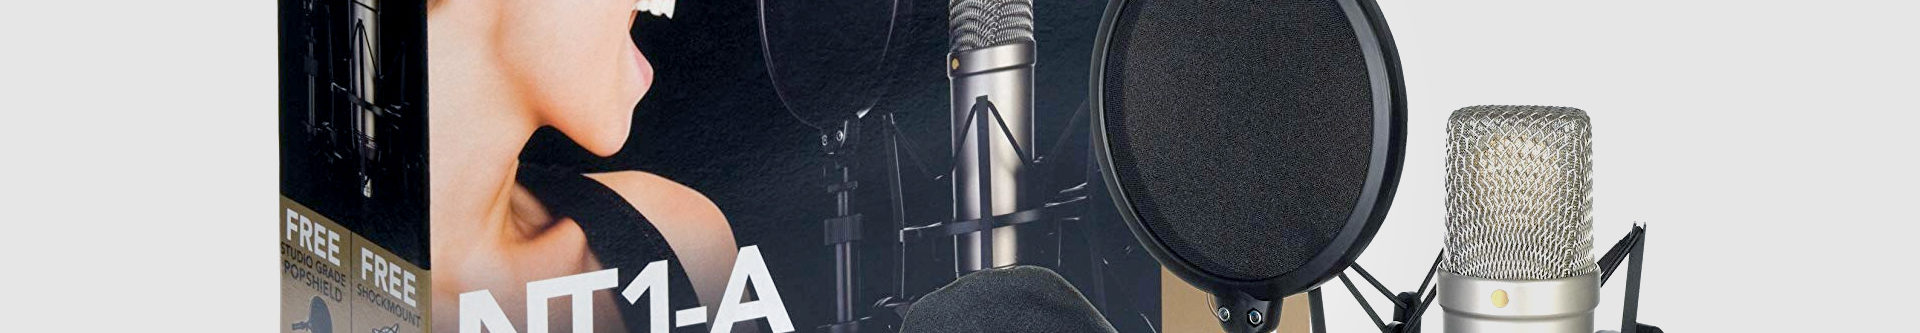 RØDE NT1-A studio condenser microphone